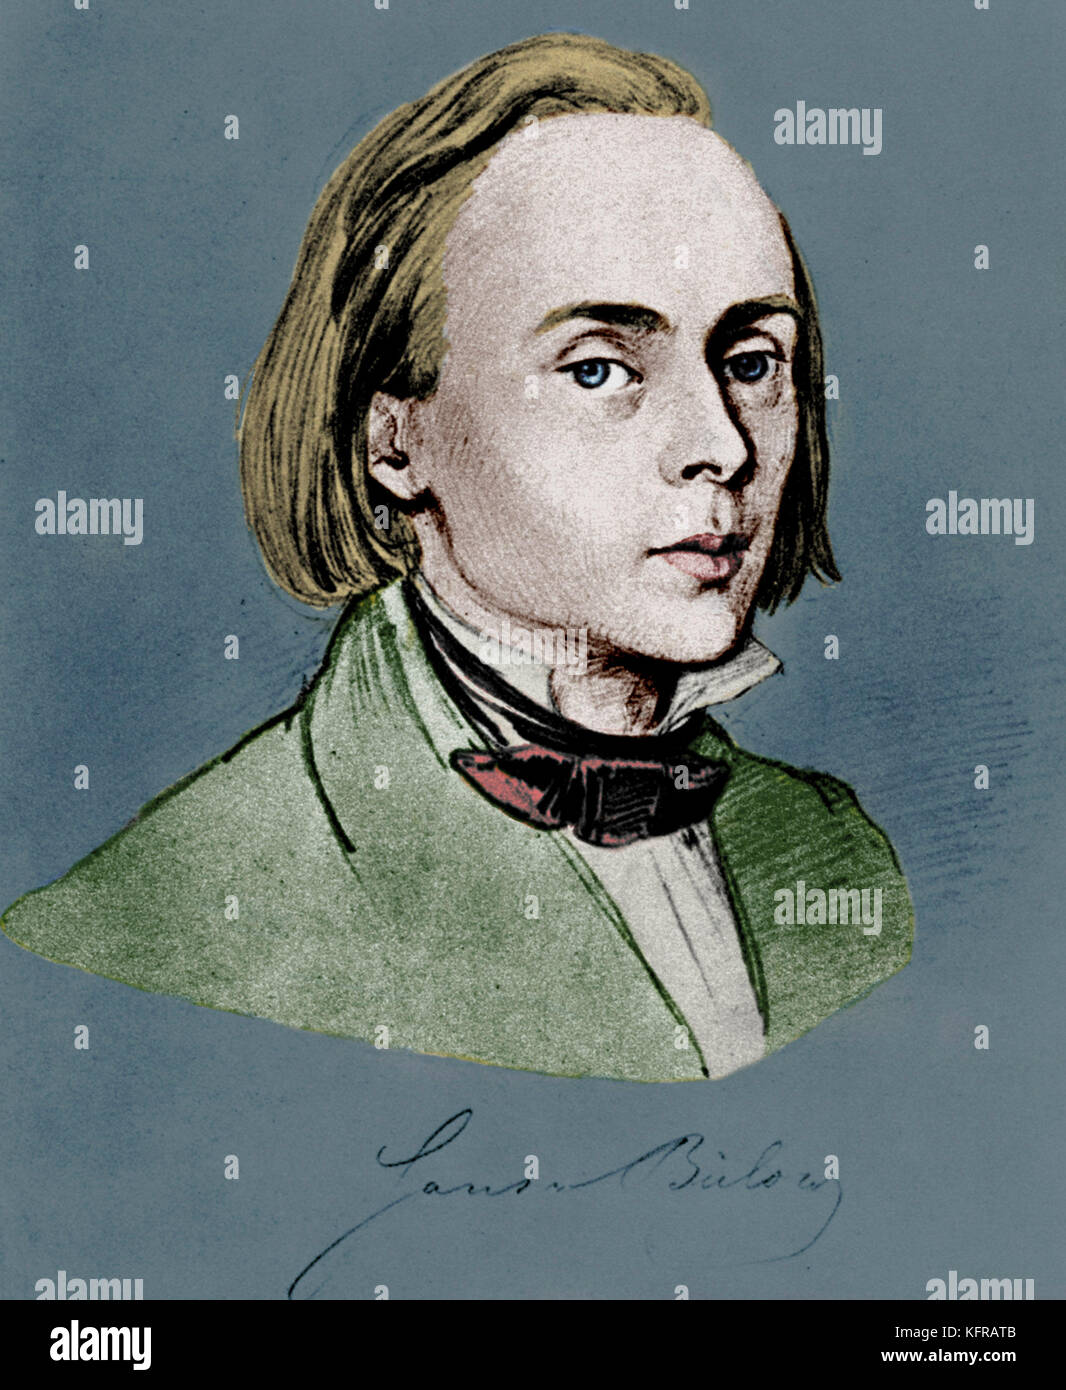 Hans von Bülow (Bulow) portrait in 1858 by F. Preller.  German pianist and composer, first husband of Cosima Liszt (1830-1894). Liszt: Hungarian pianist and composer (1811-1886). Stock Photo